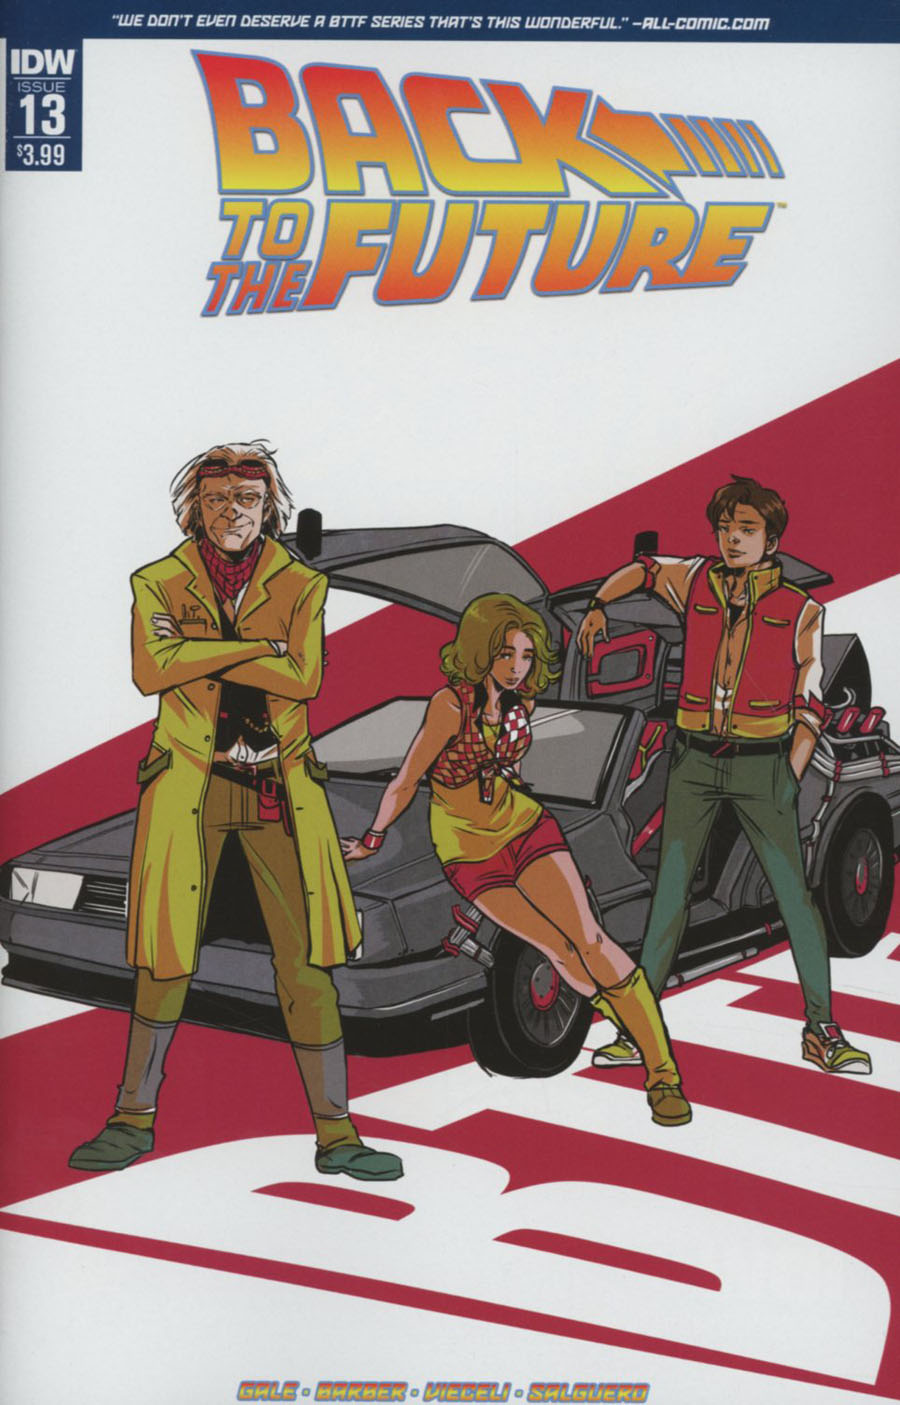 Back To The Future Vol 2 #13 Cover A Regular Emma Vieceli Cover